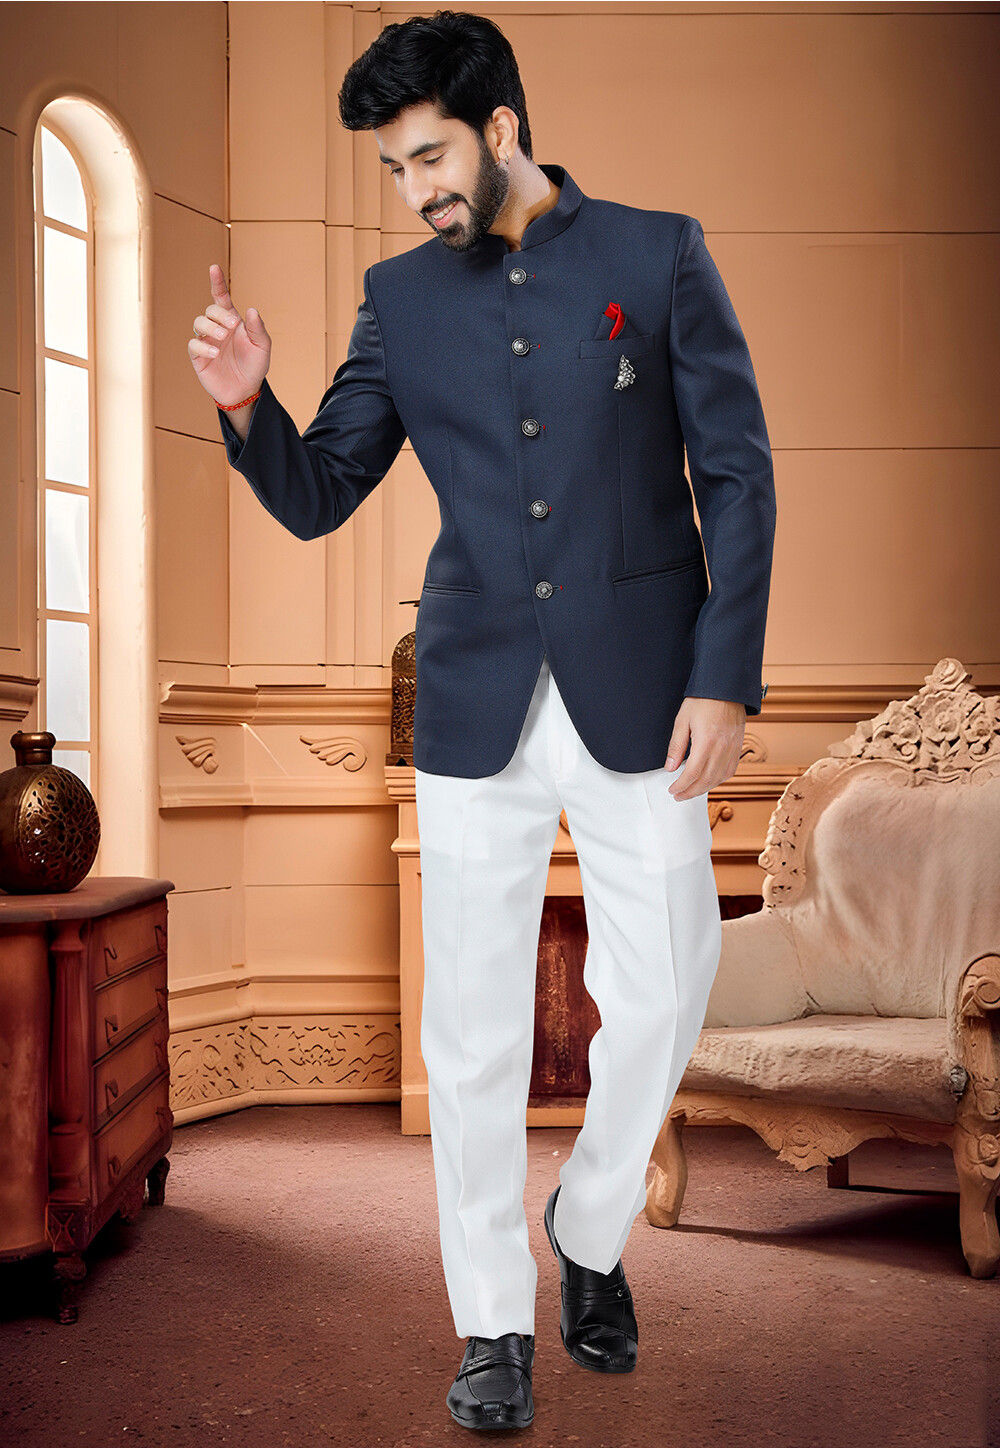 Imported Royal Blue Jodhpuri Suit